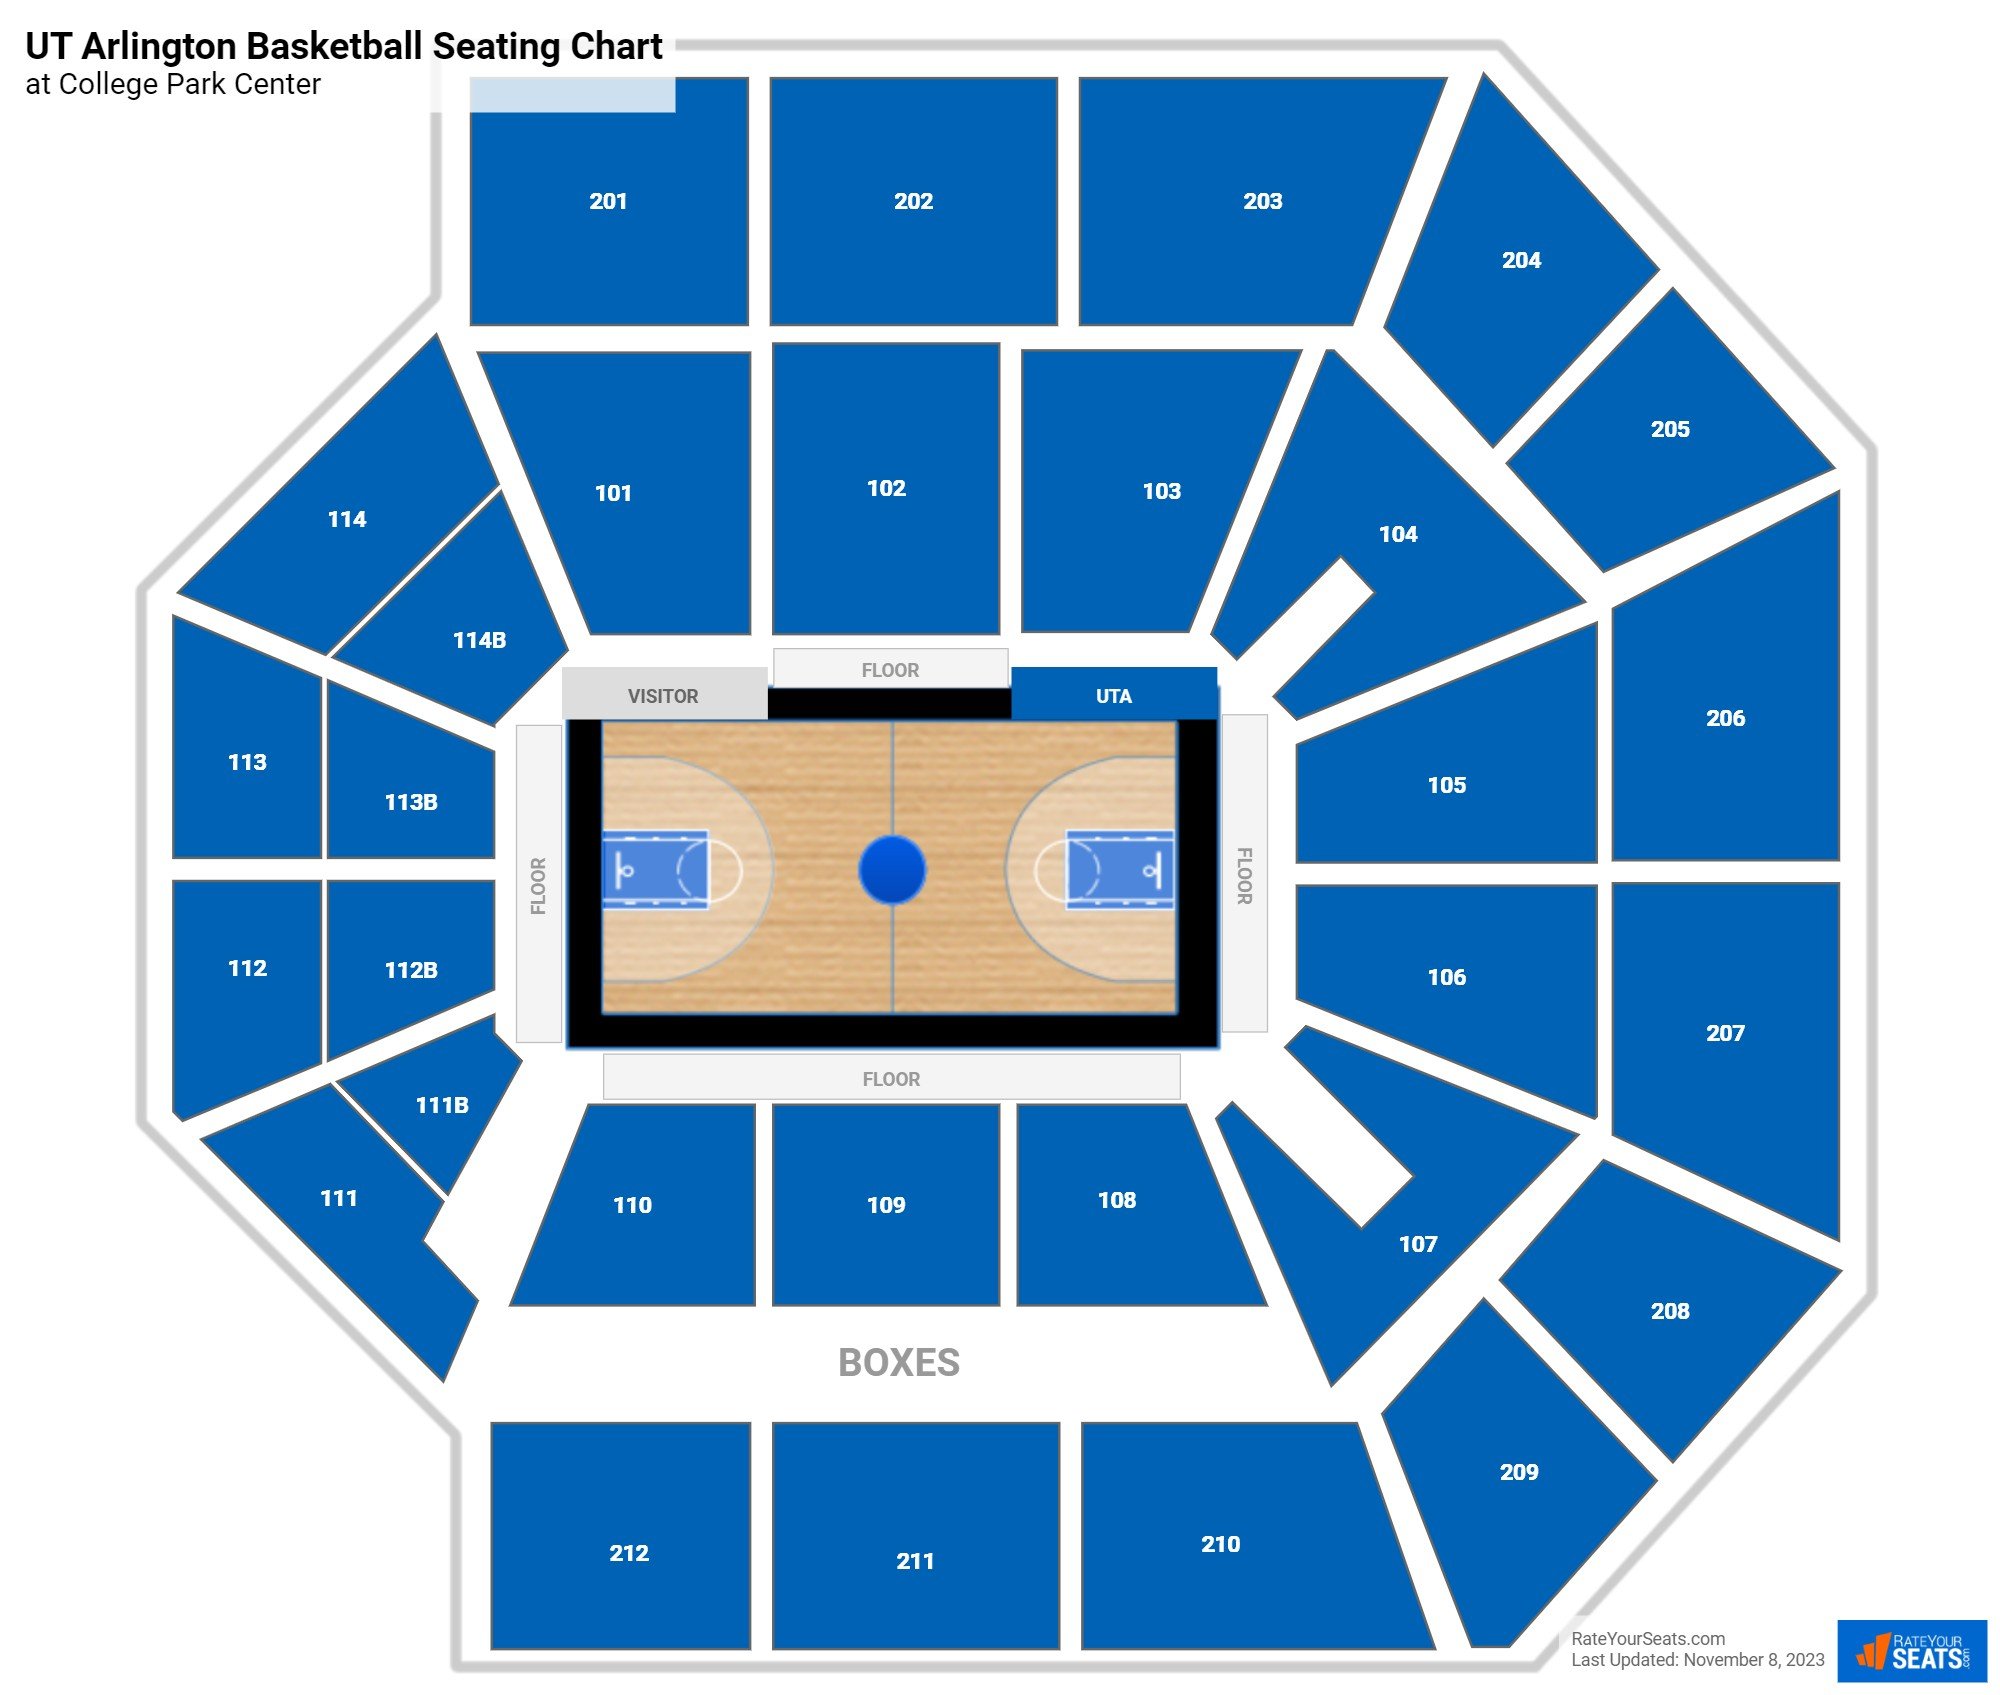 UT Arlington Mavericks Seating Chart at College Park Center